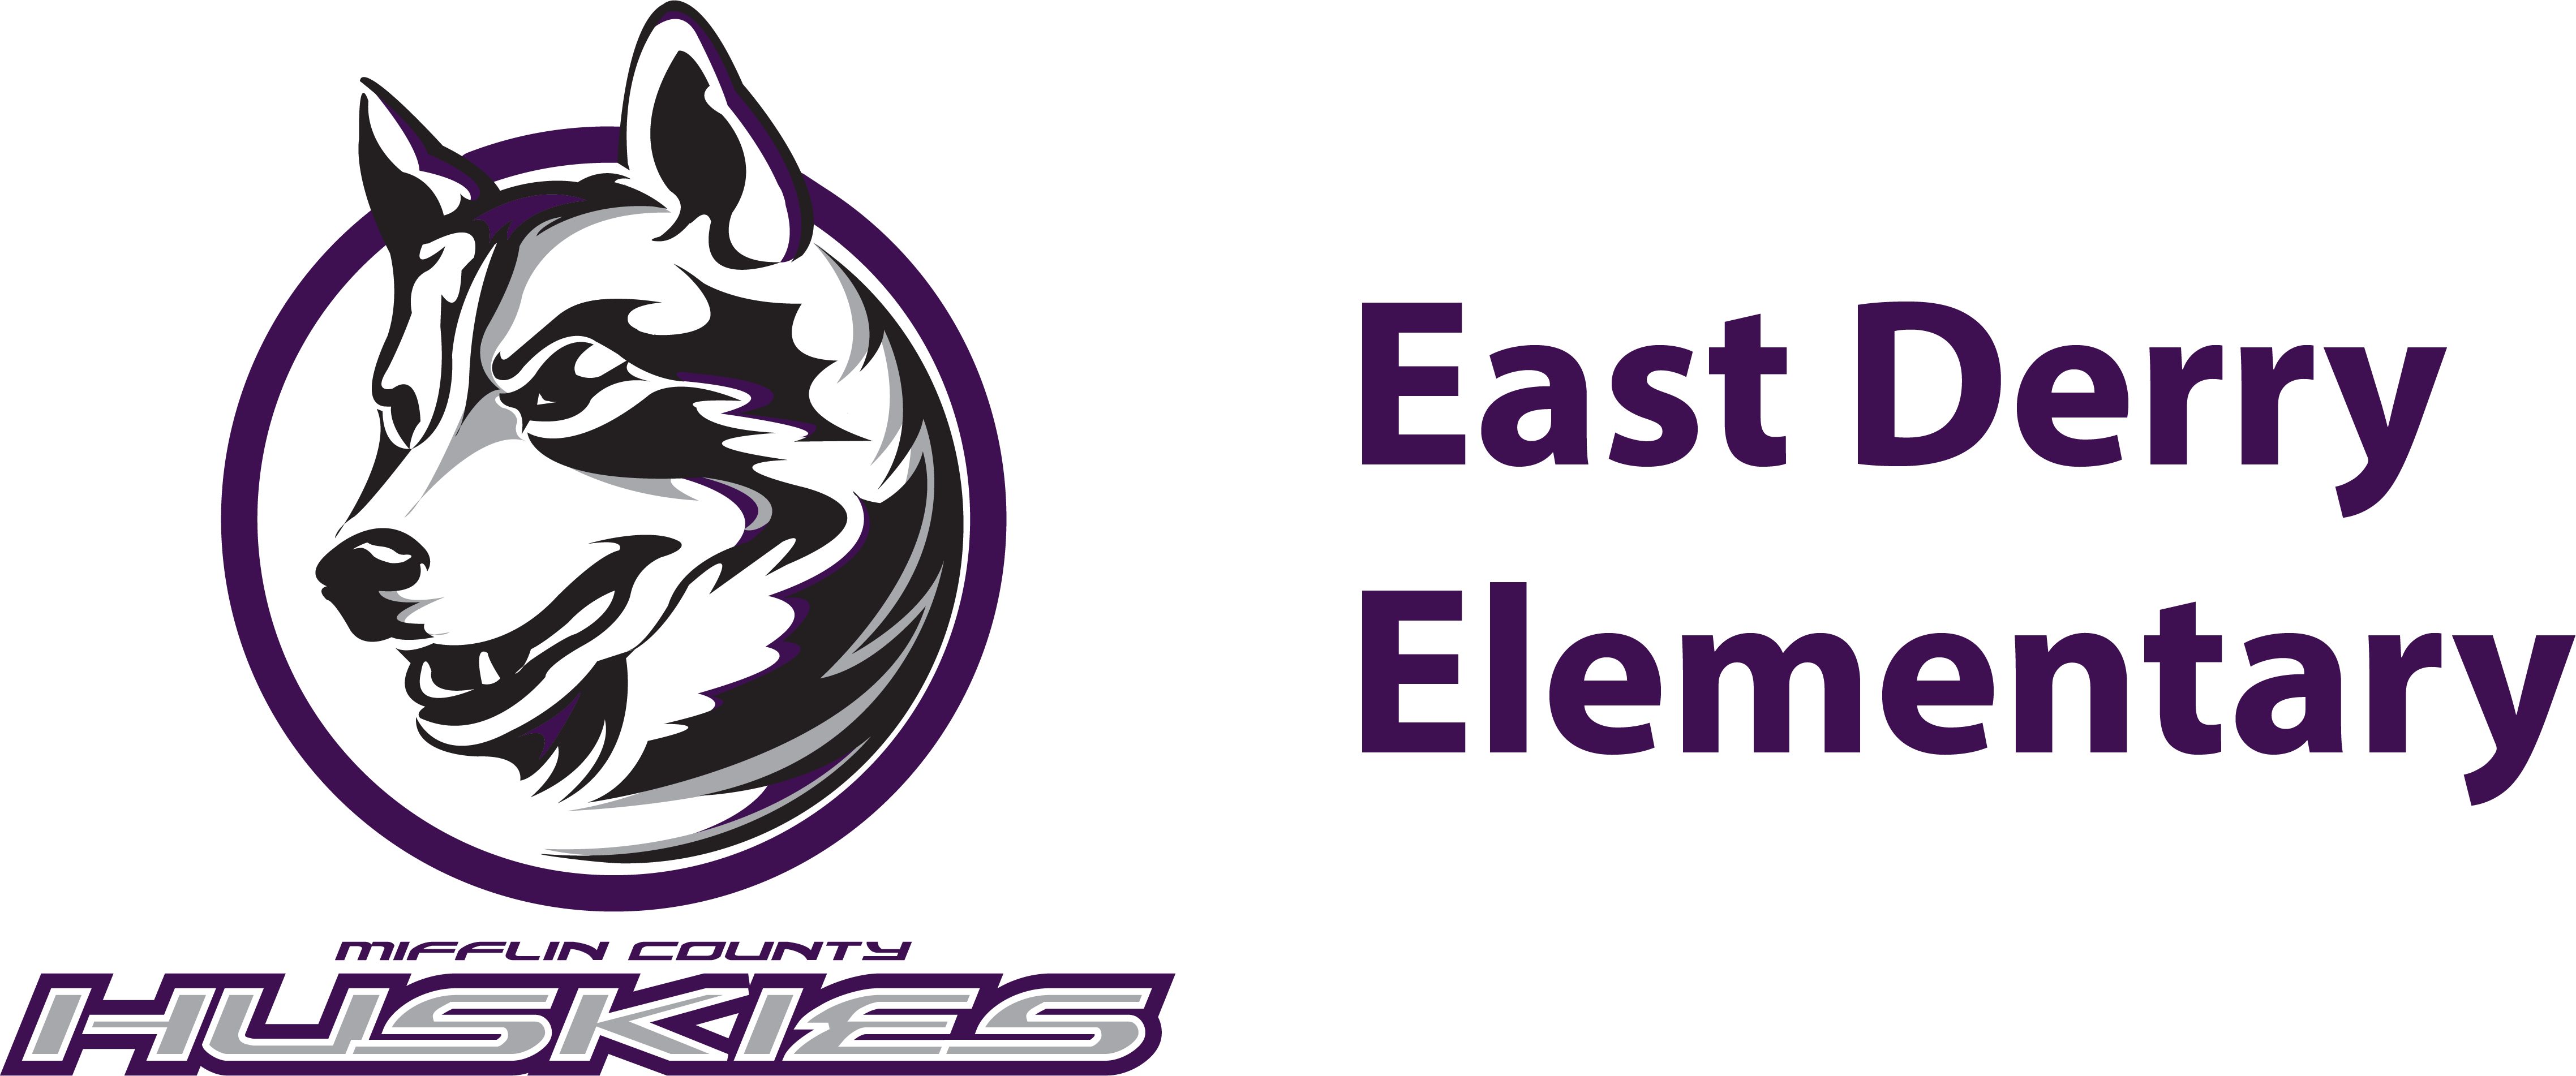 Husky Logo - East Derry Elementary School